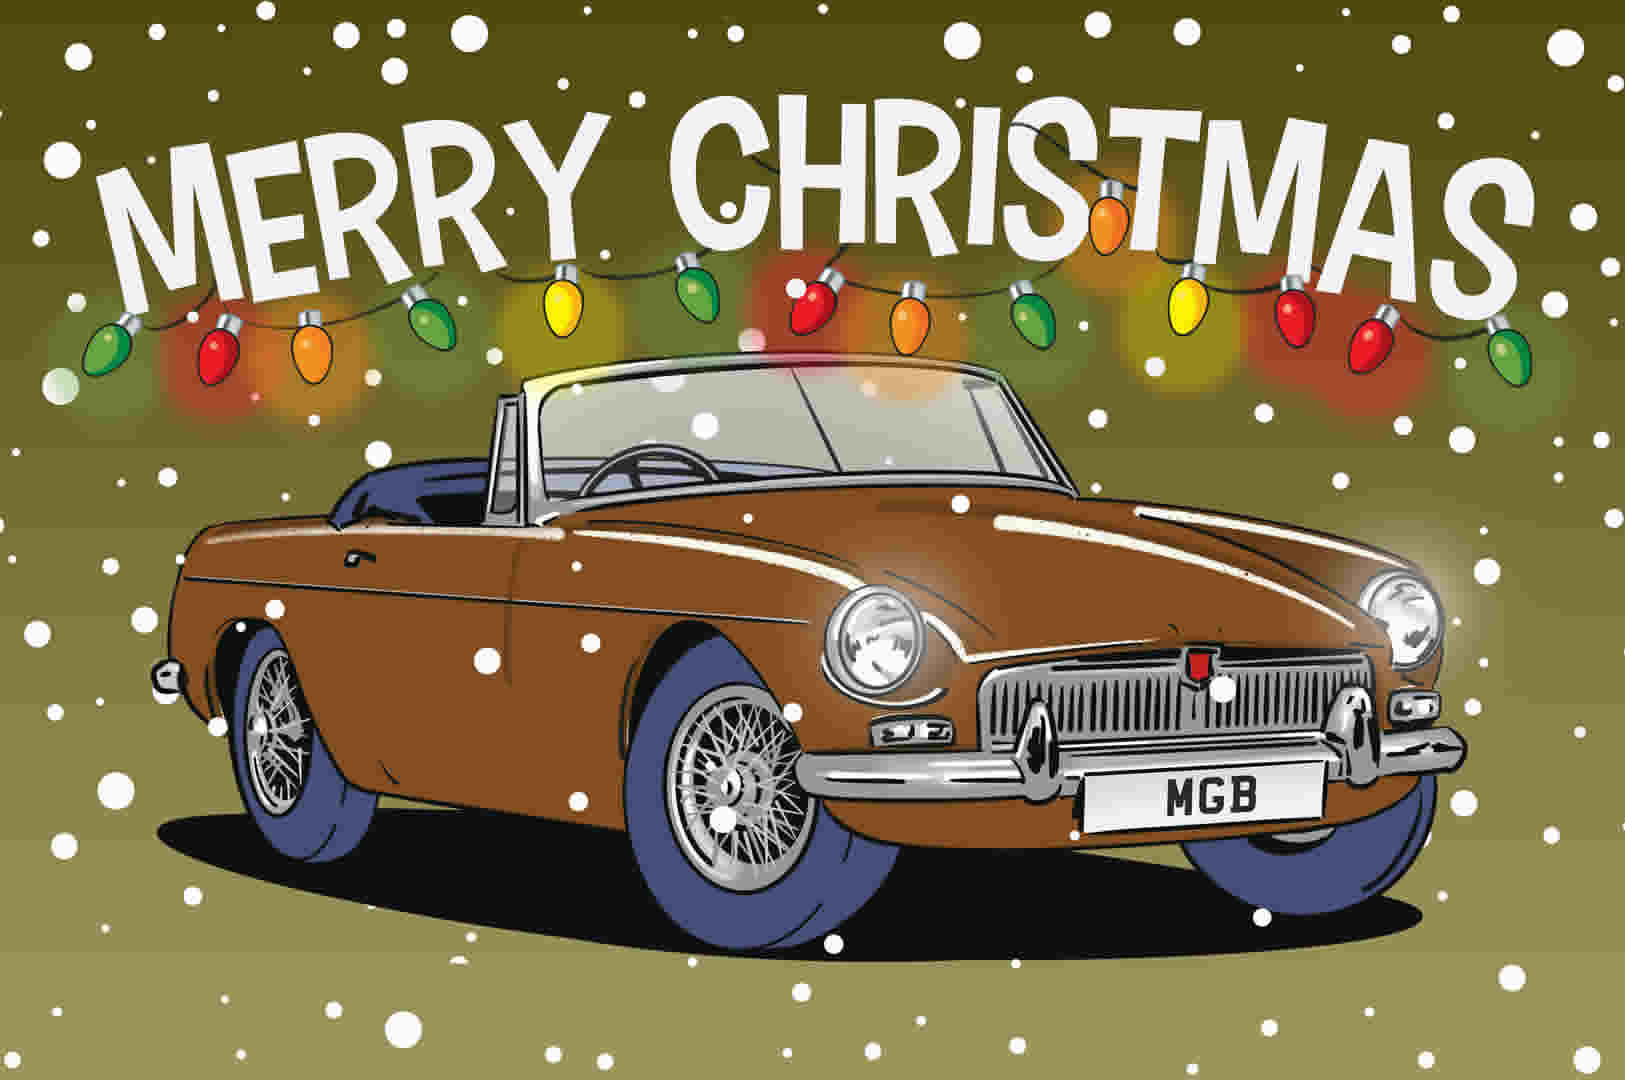 MGB Roadster Christmas Card